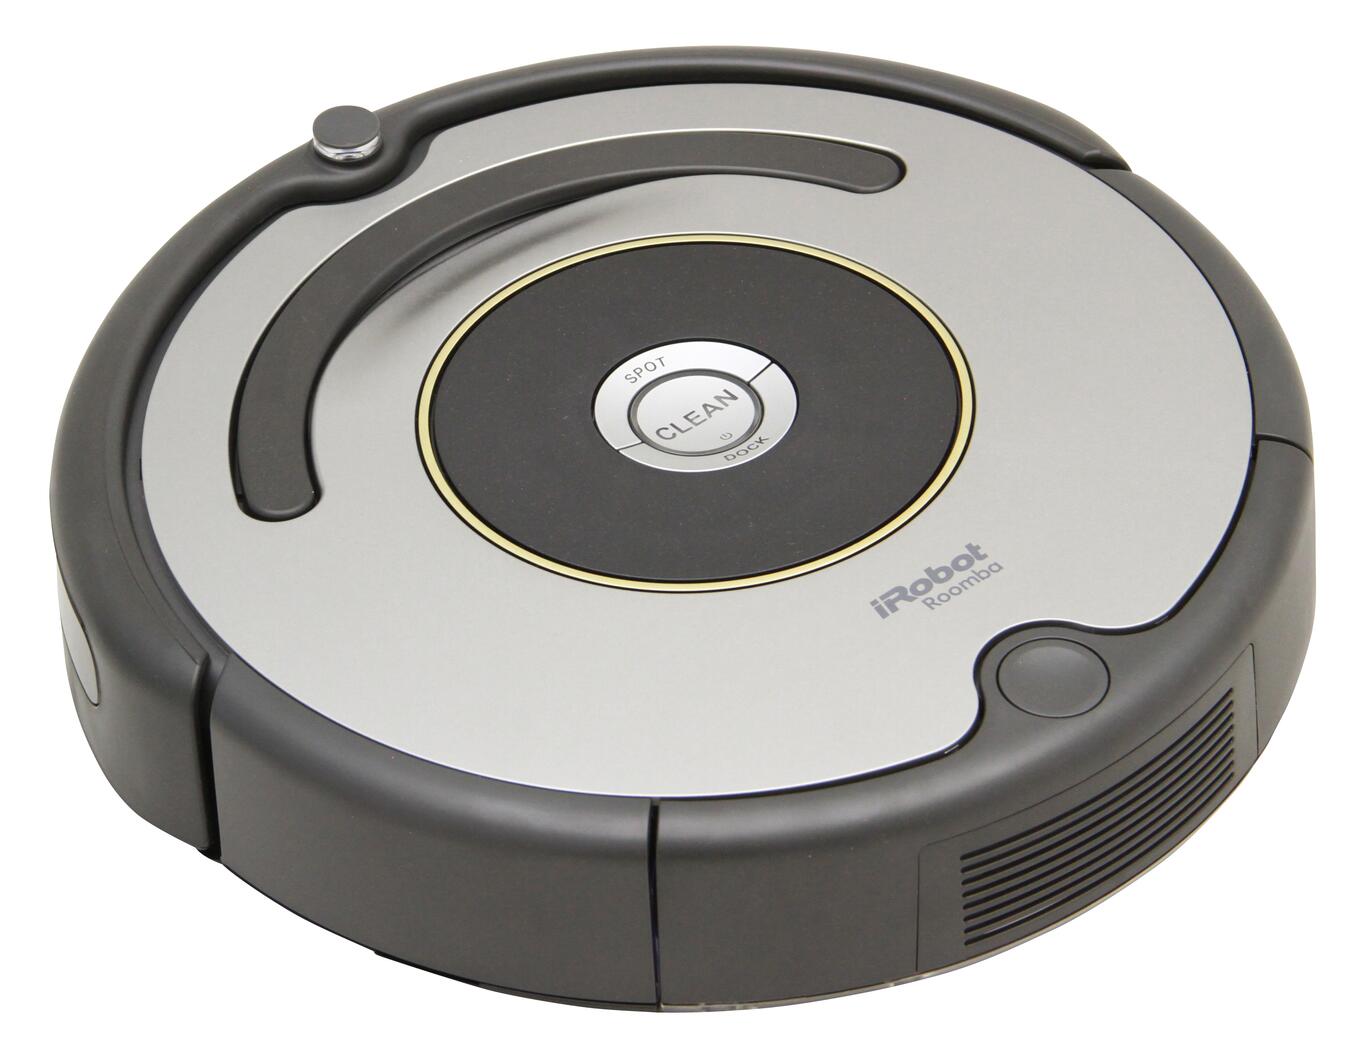 Roomba 615 iRobot